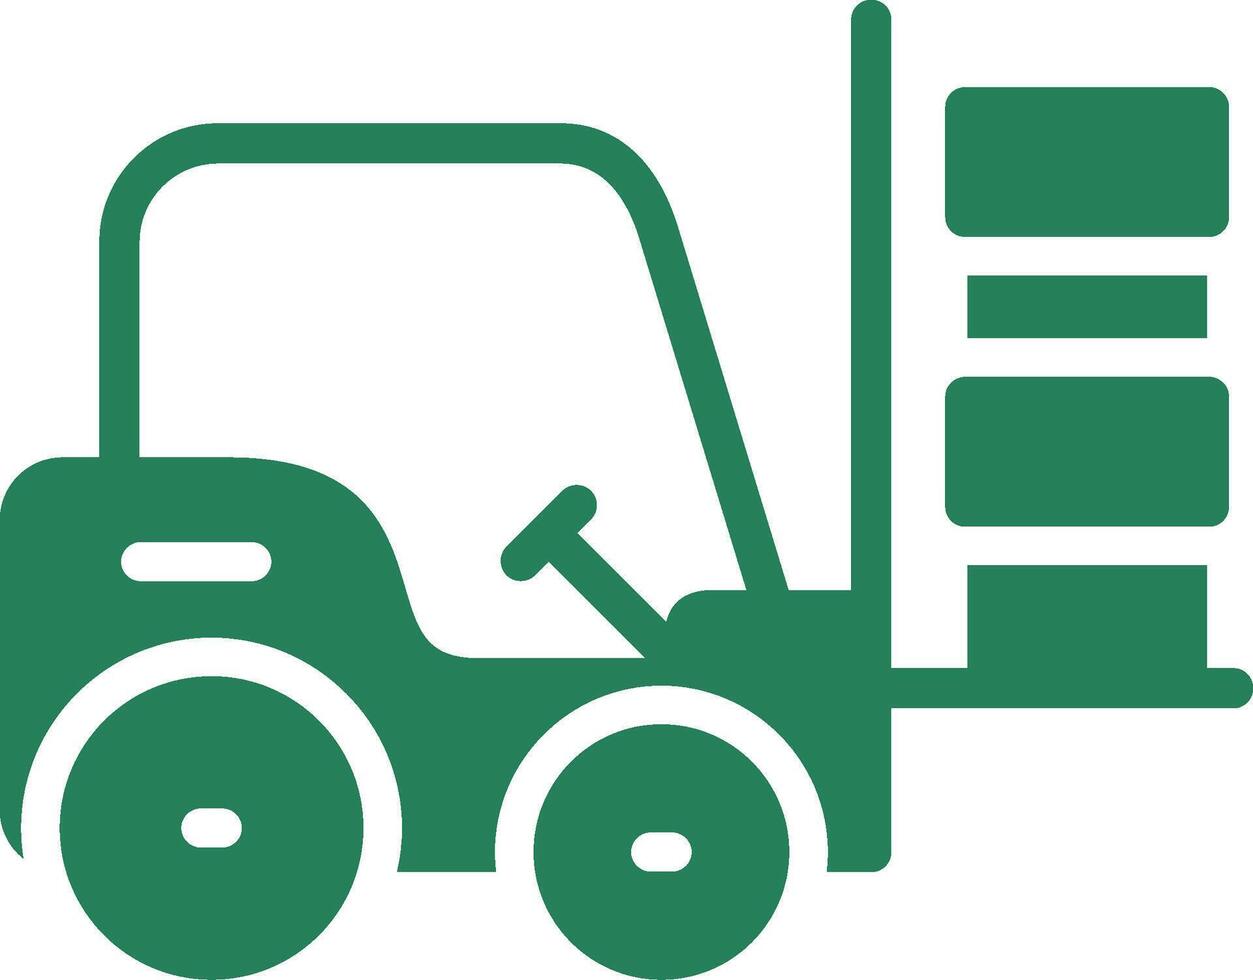 Forklift Creative Icon Design vector